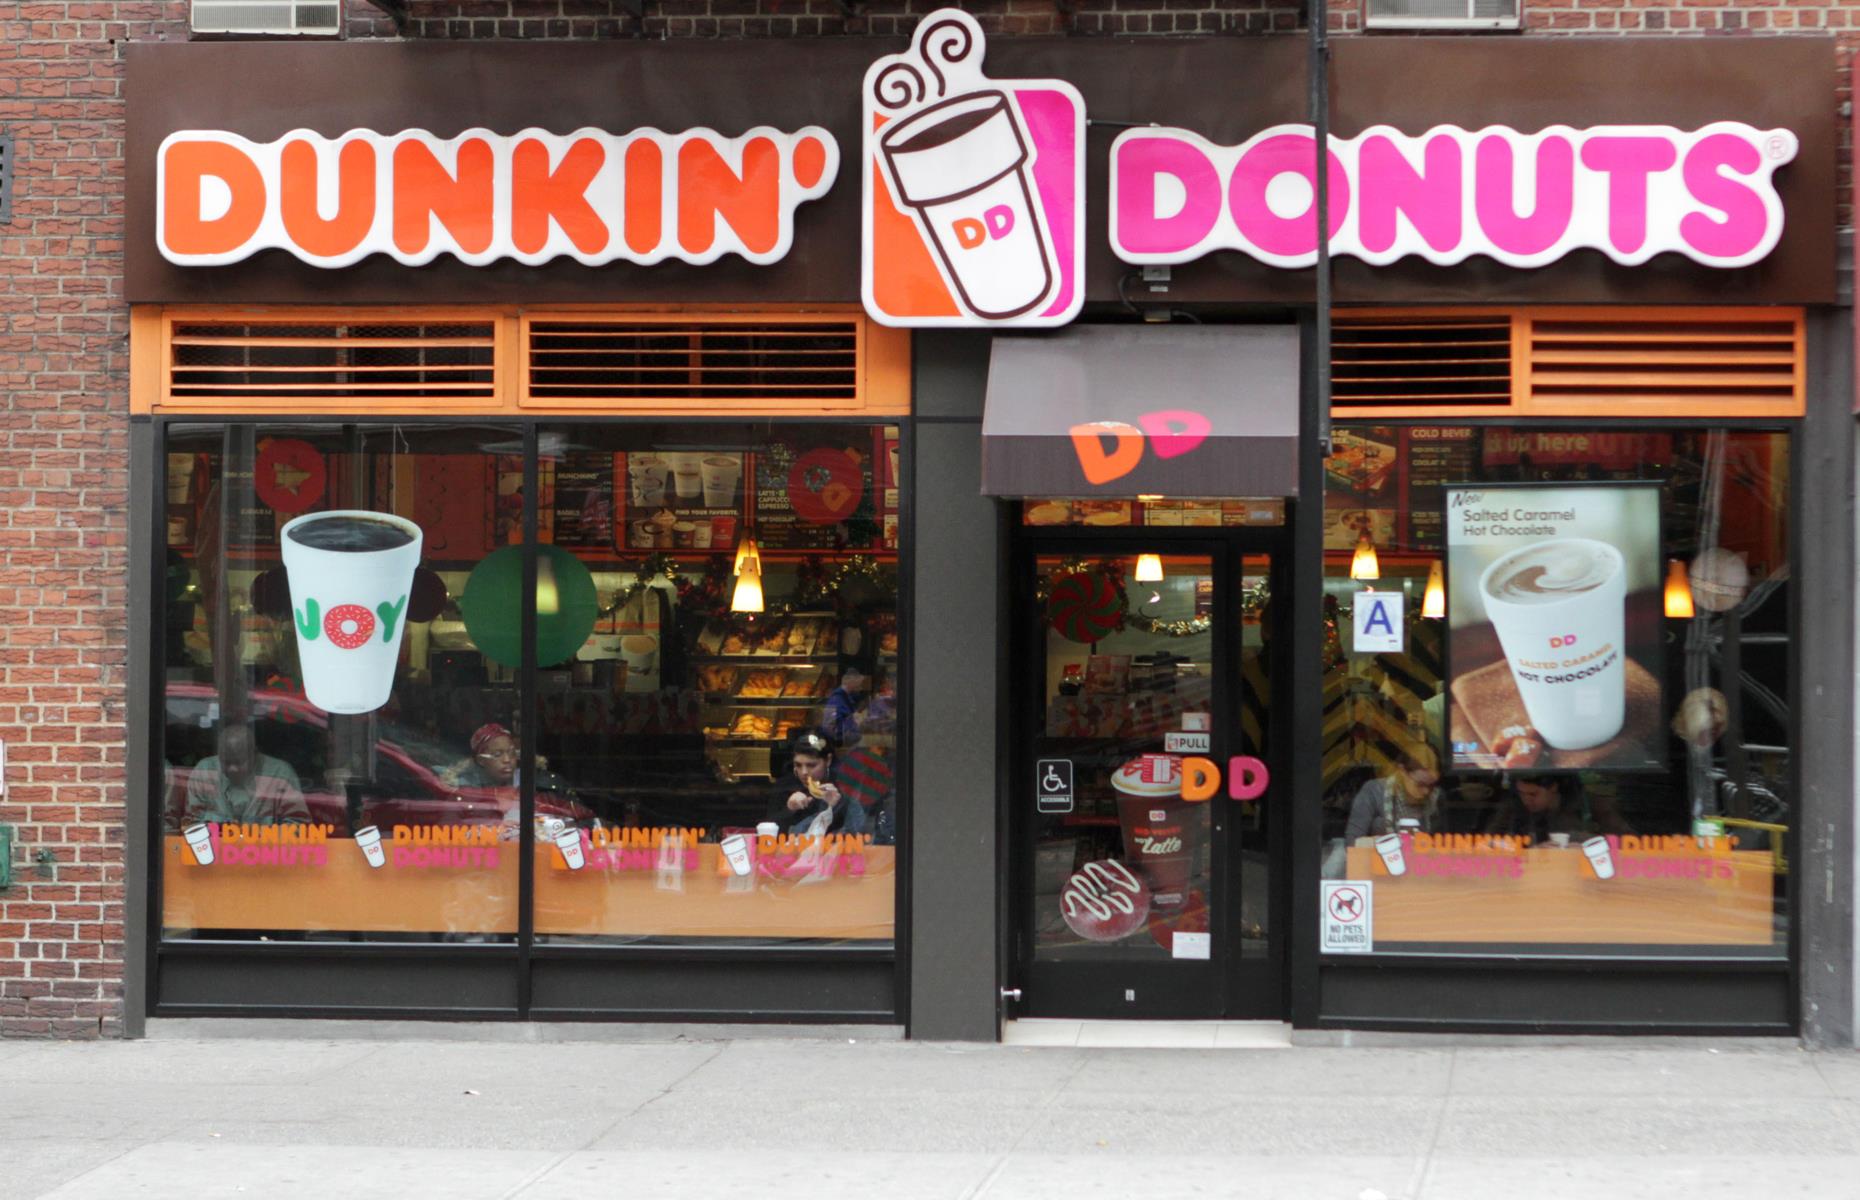 Starbucks vs Dunkin' Donuts